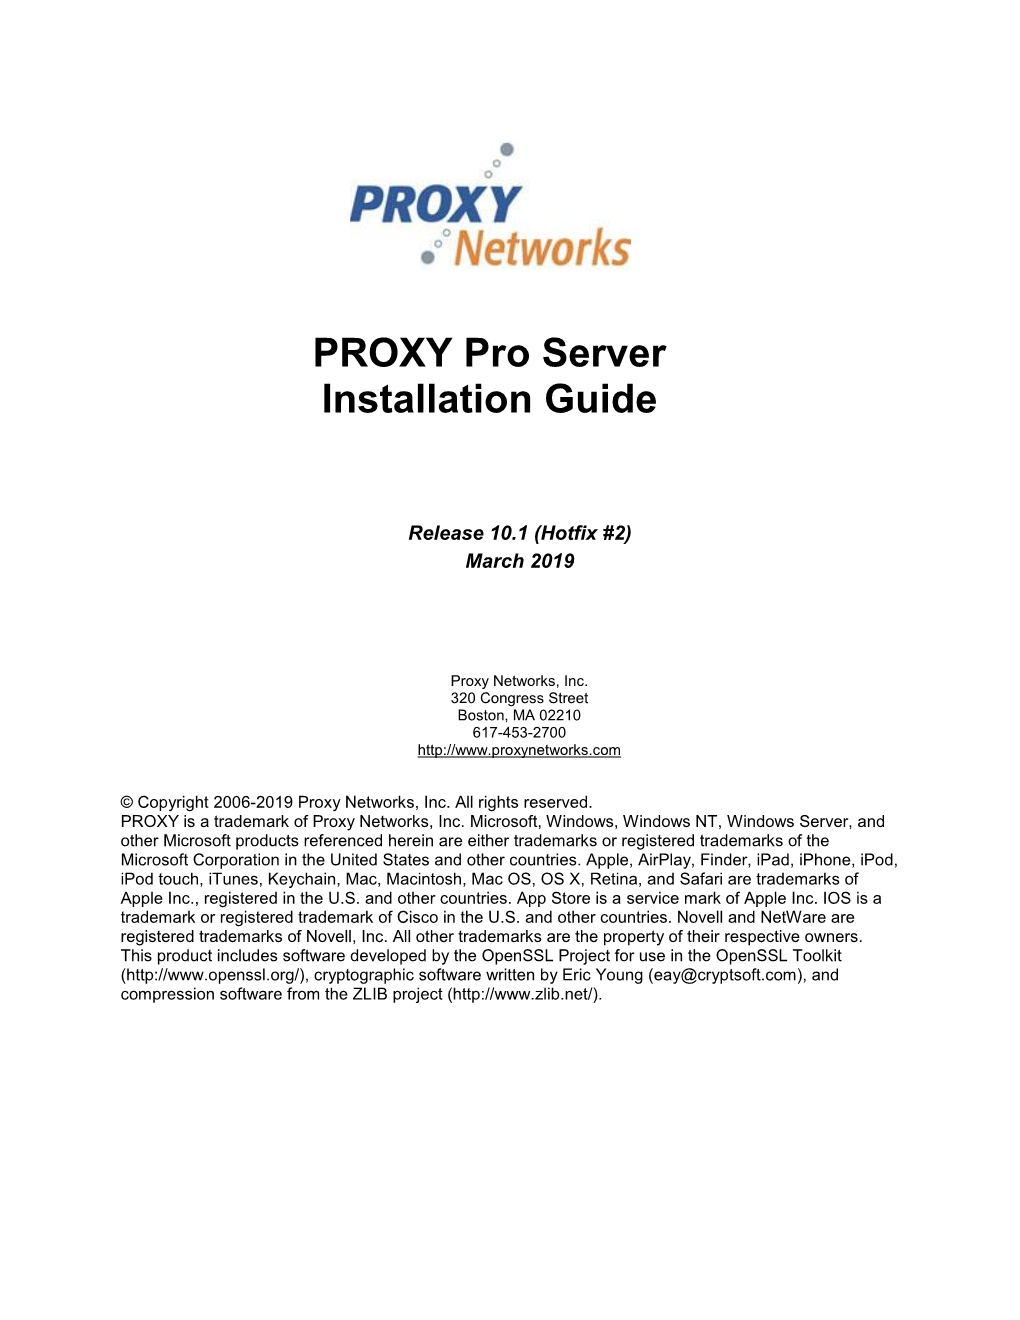 PROXY Pro Server Installation Guide